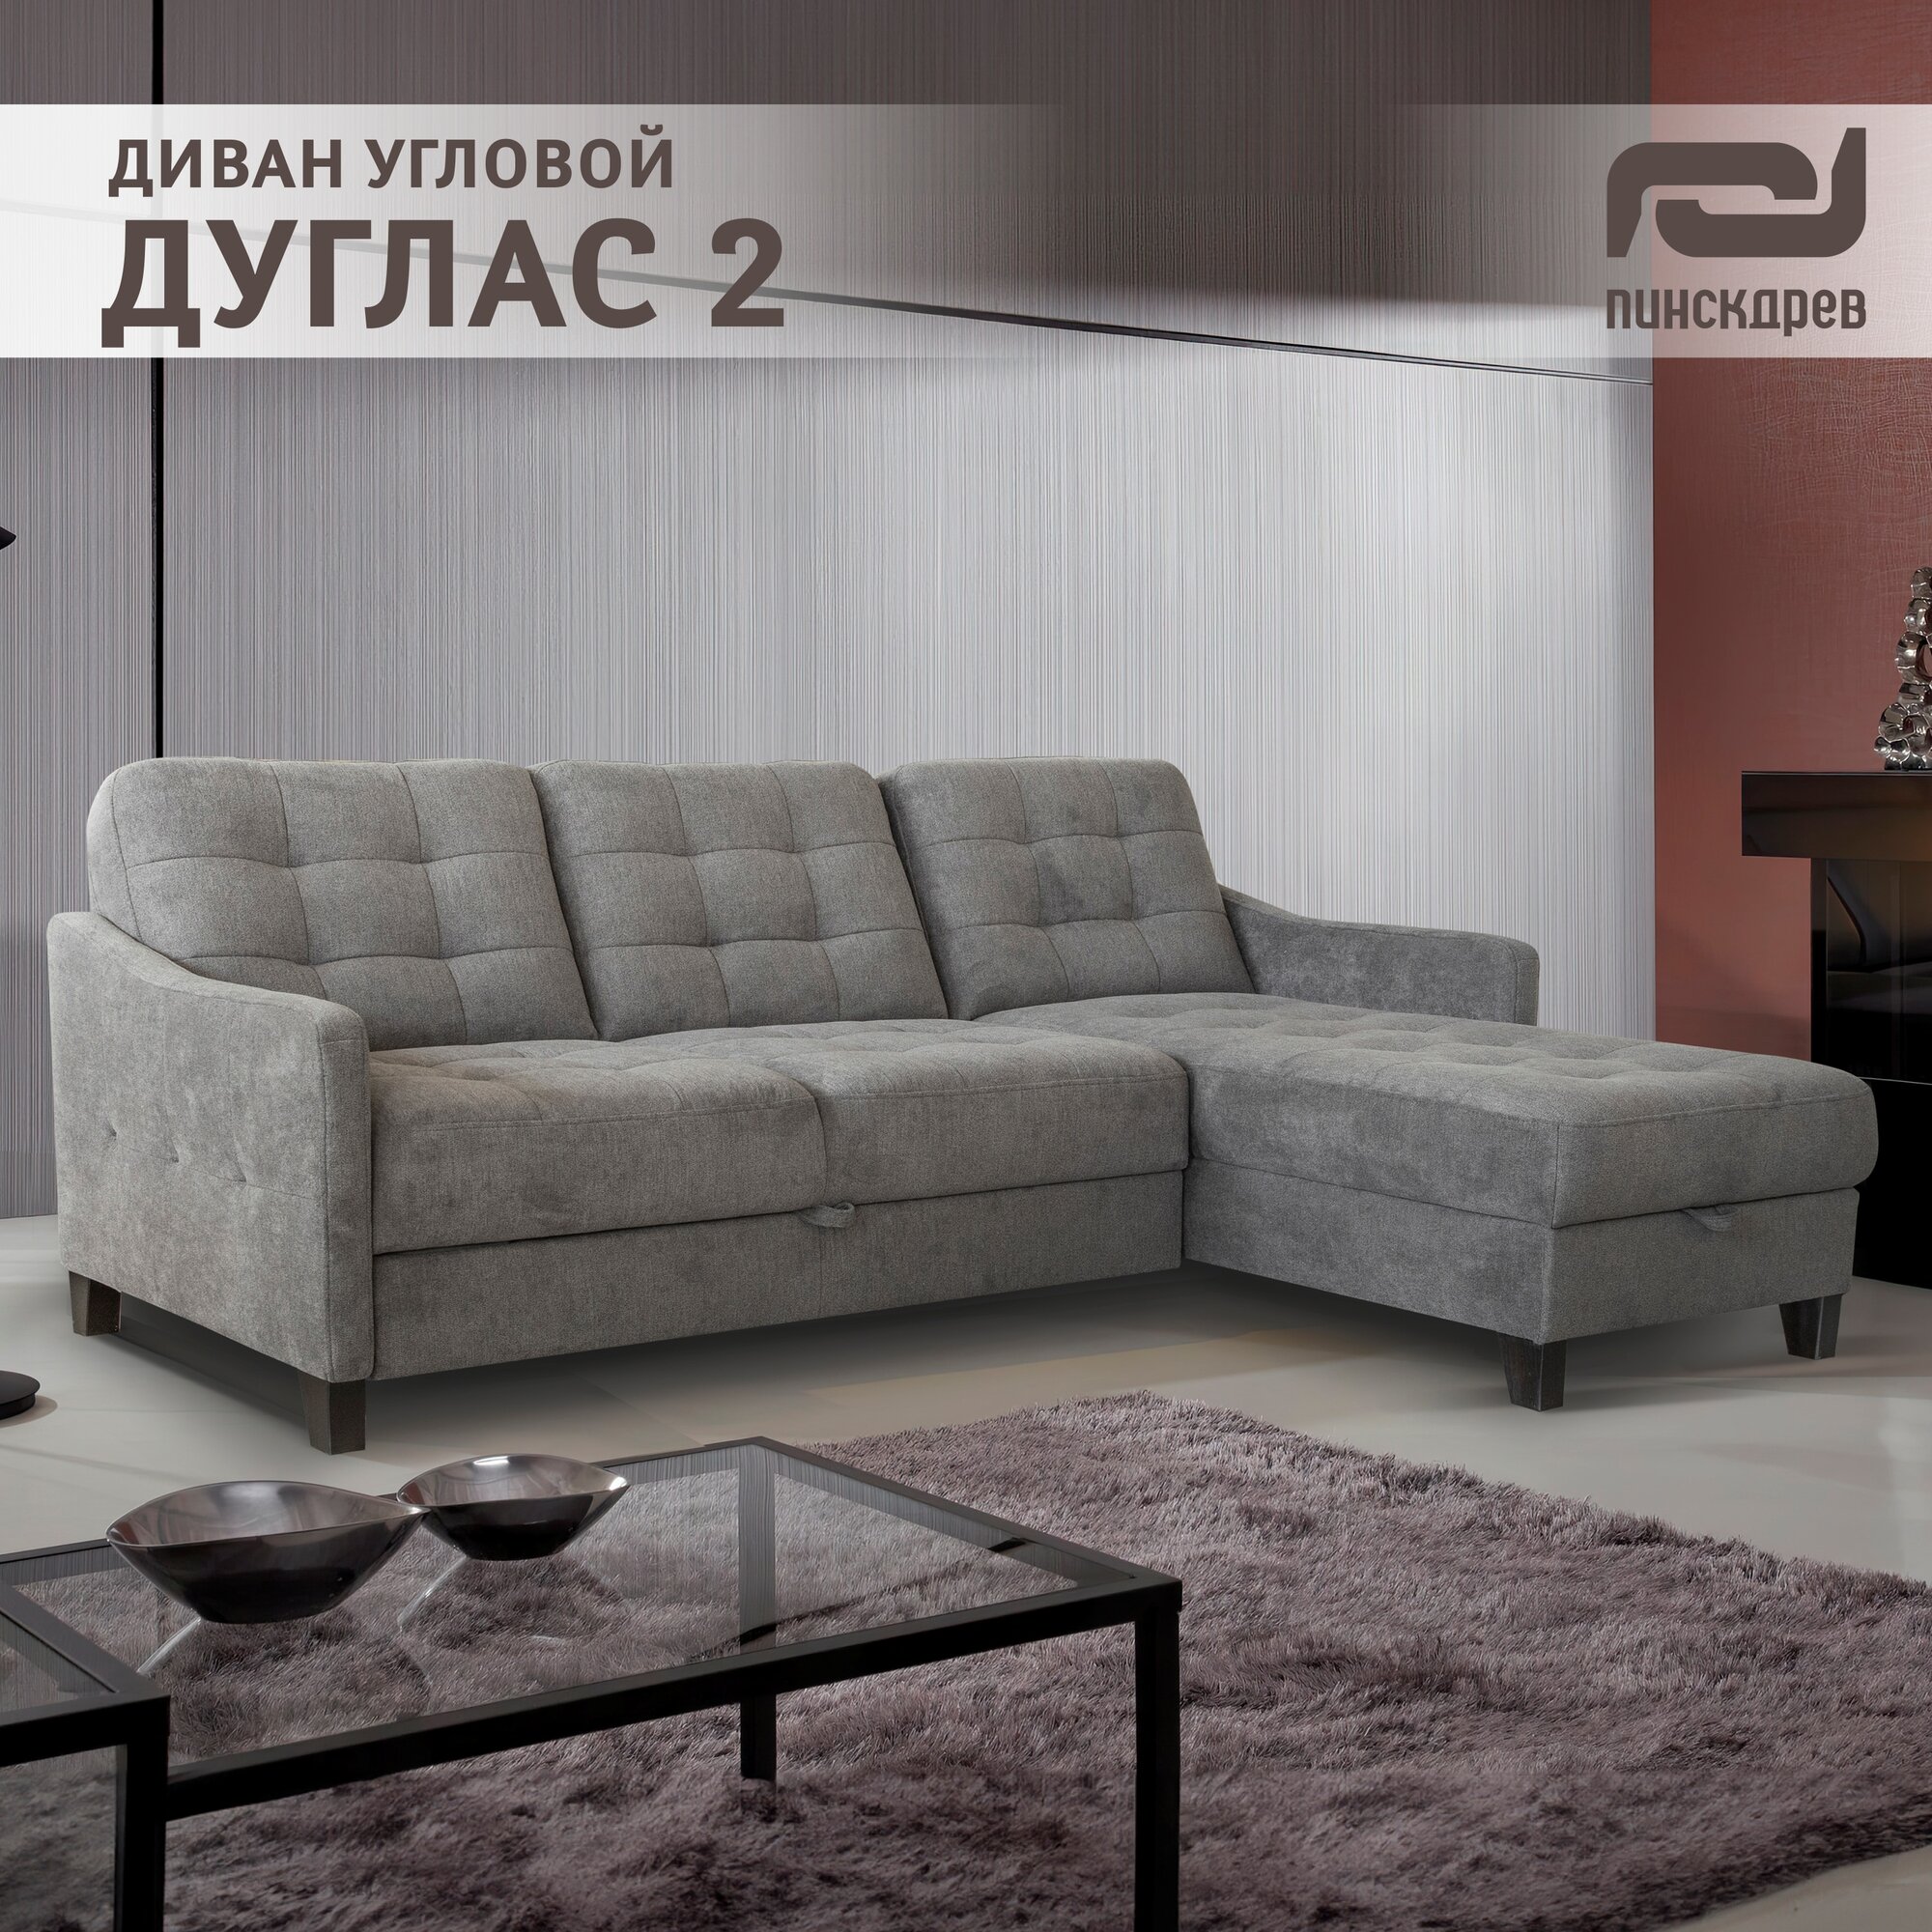 Угловой диван «Дуглас 2» 2МL8МR, серый